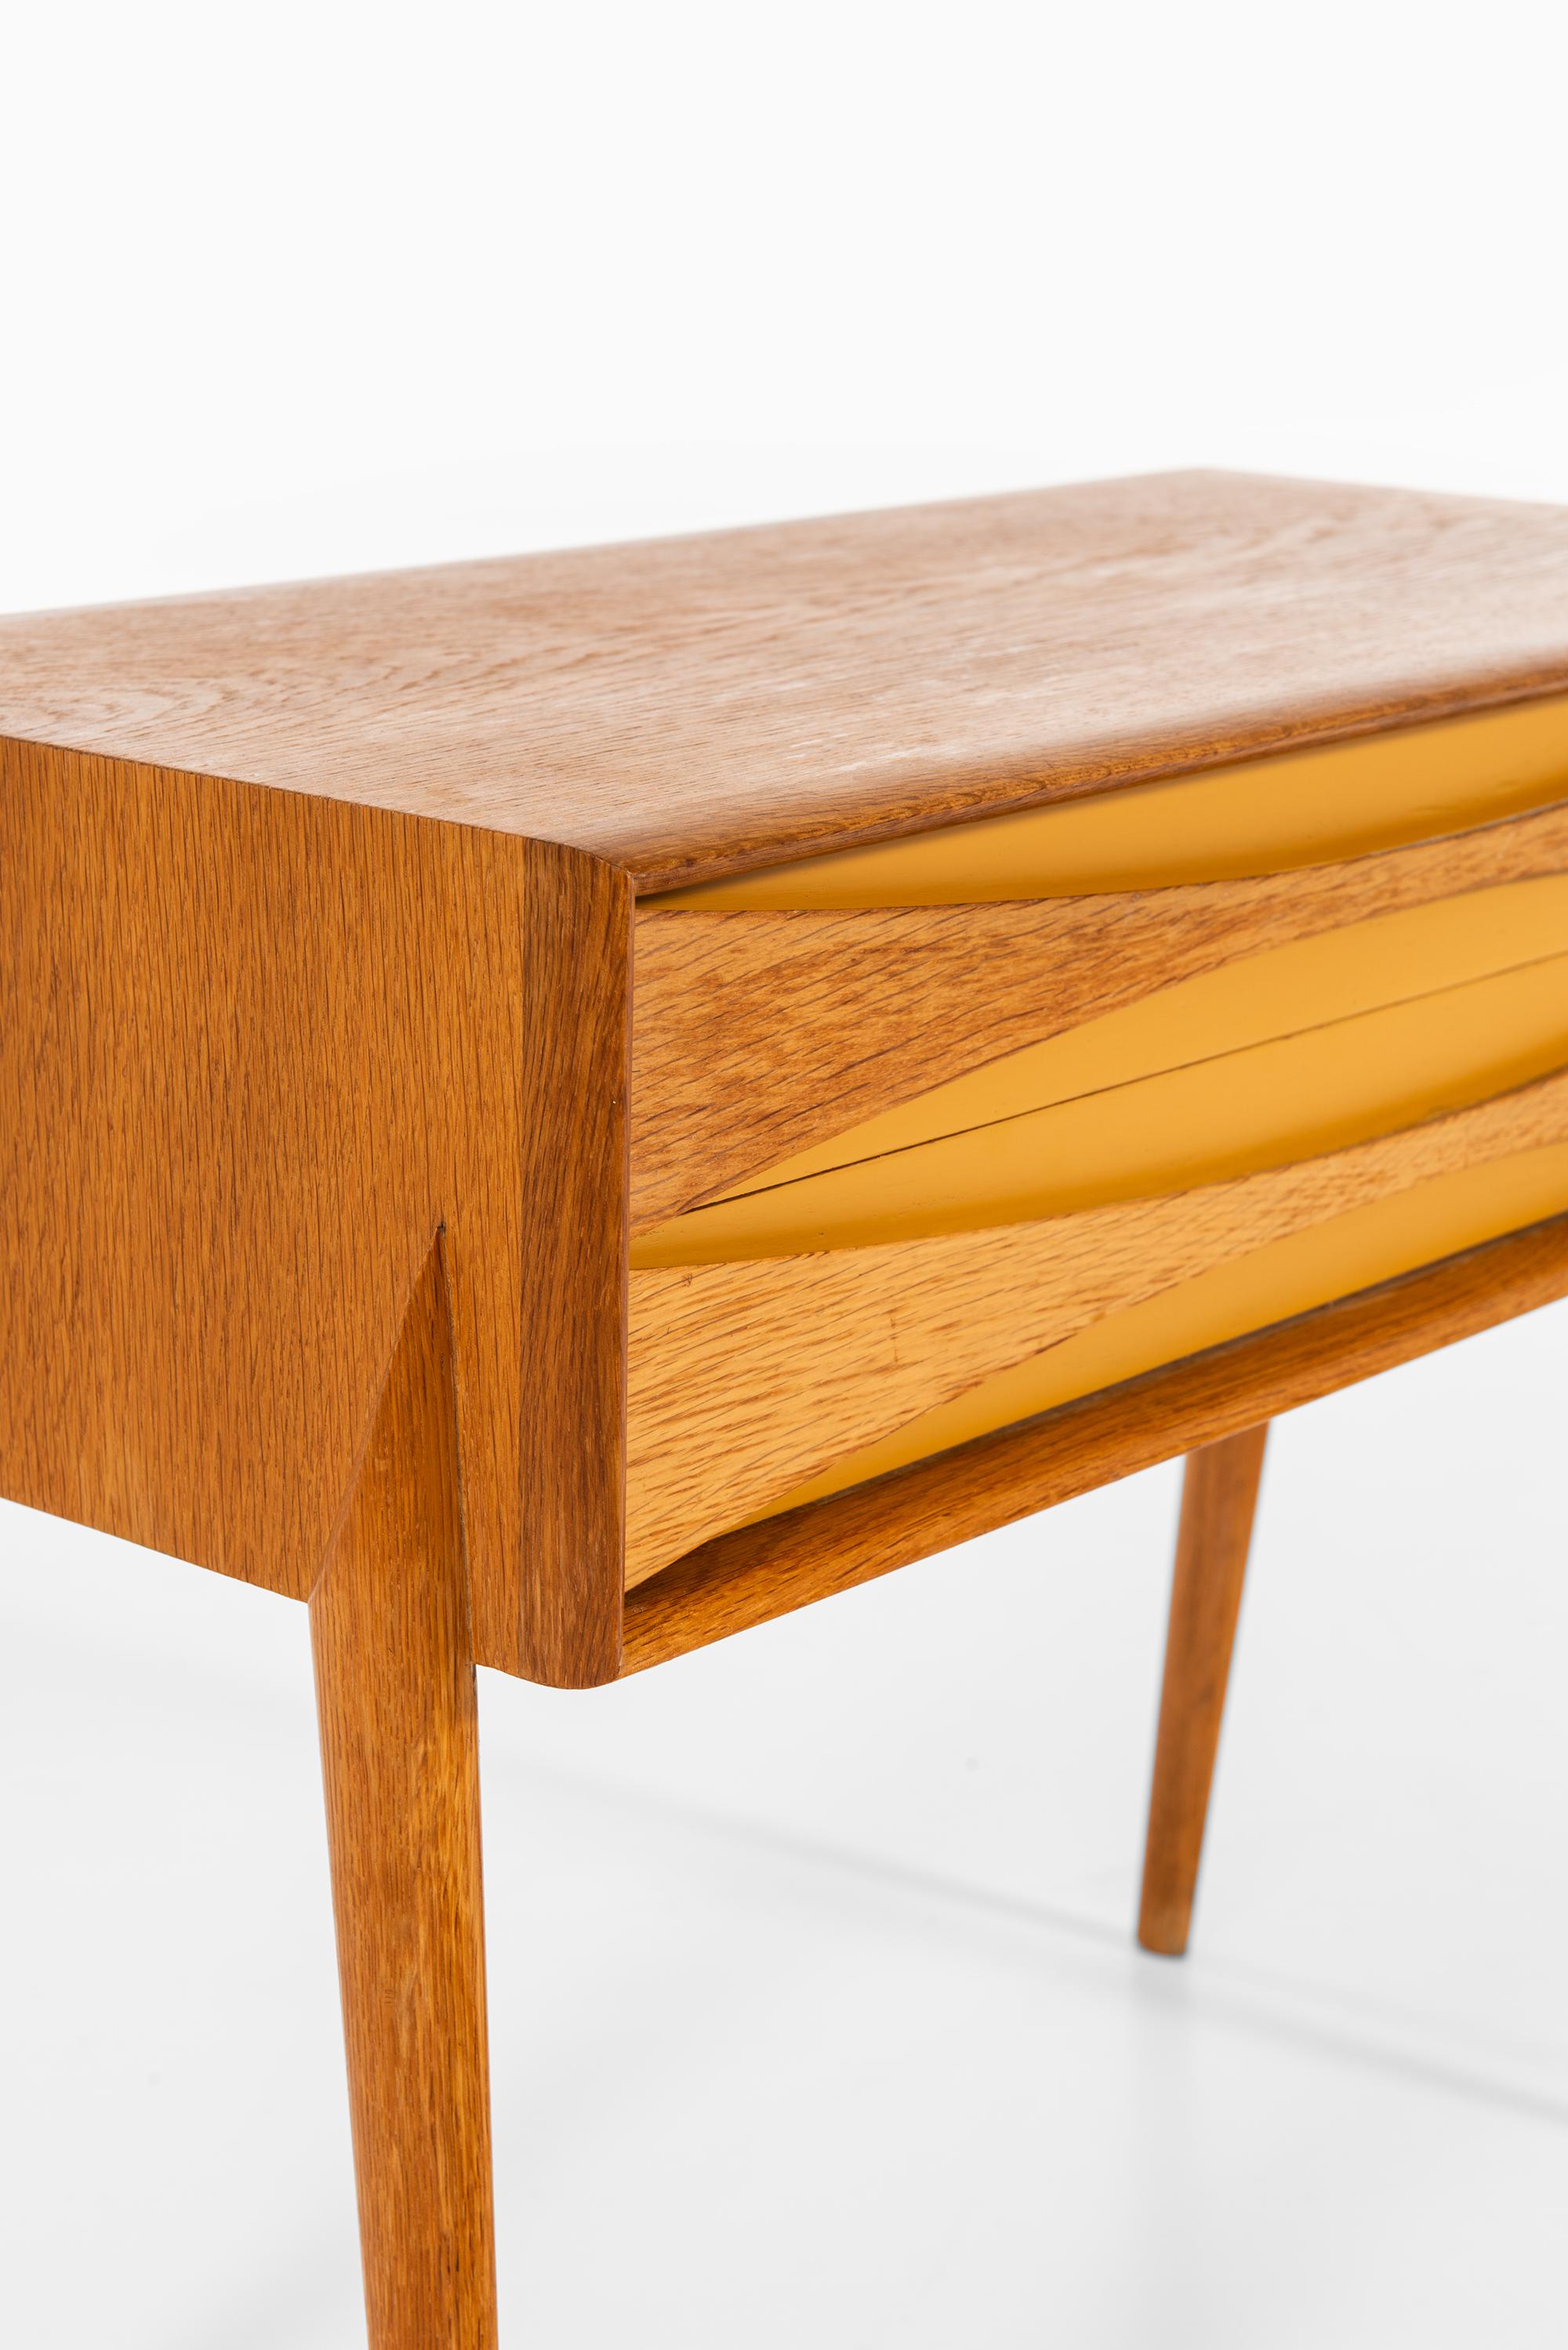 Mid-20th Century Rimbert Sandholt Side Table / Bureau Produced by Glas & Trä Hovmantorp in Sweden For Sale